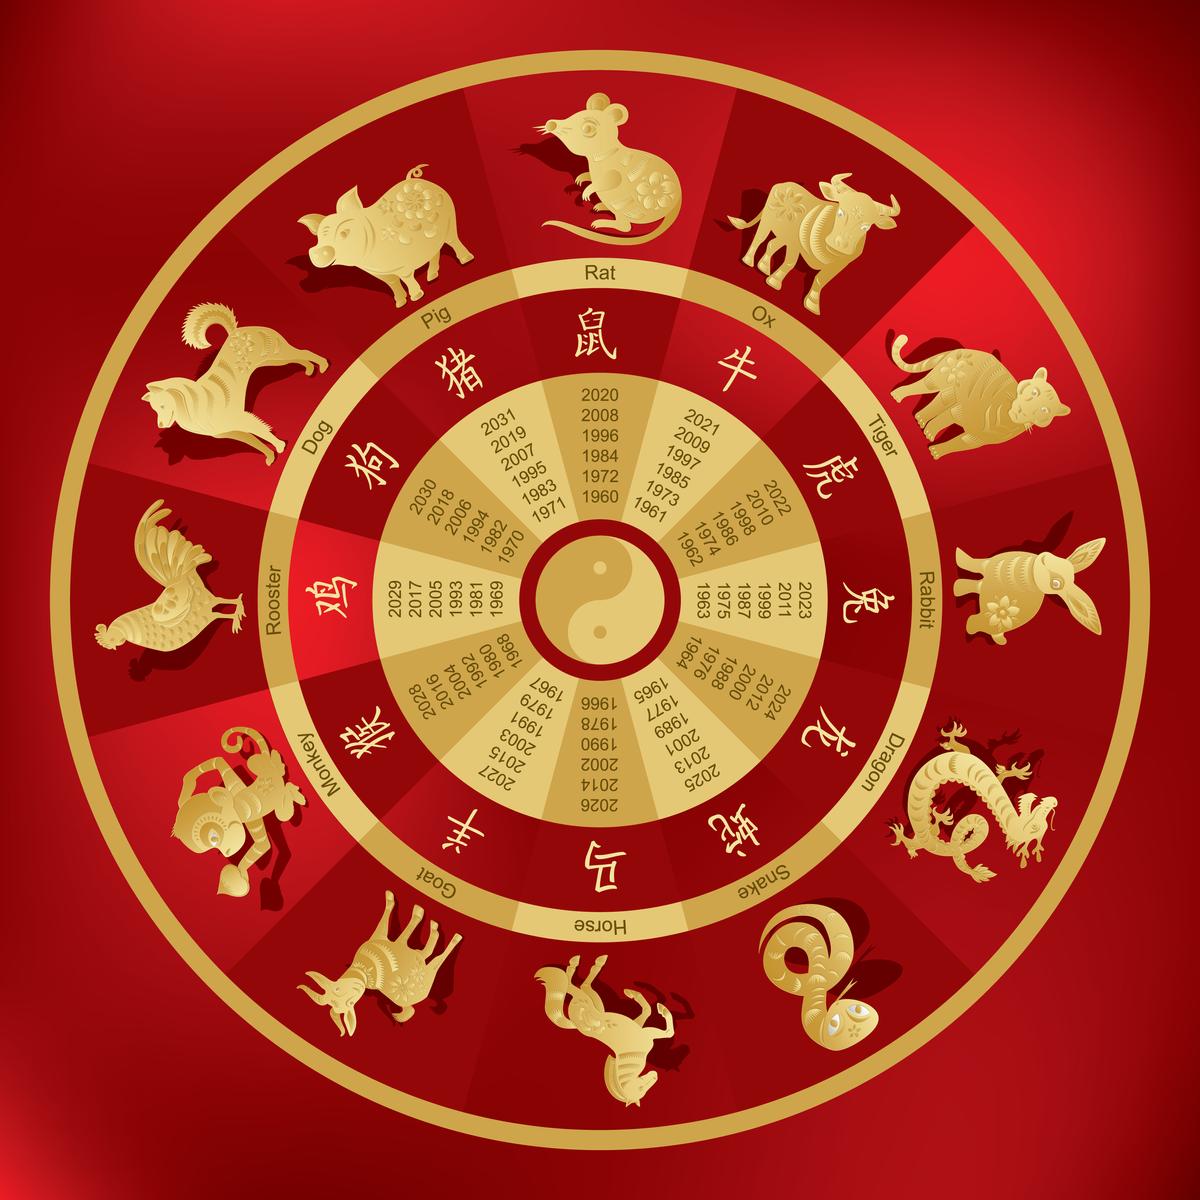 Illustration - Shutterstock | <a href="https://www.shutterstock.com/image-vector/chinese-zodiac-wheel-twelve-animals-corresponding-560362729?src=zFohTBkLmCWg9T8eRuAw6Q-1-0&studio=1">Chonnanit</a>